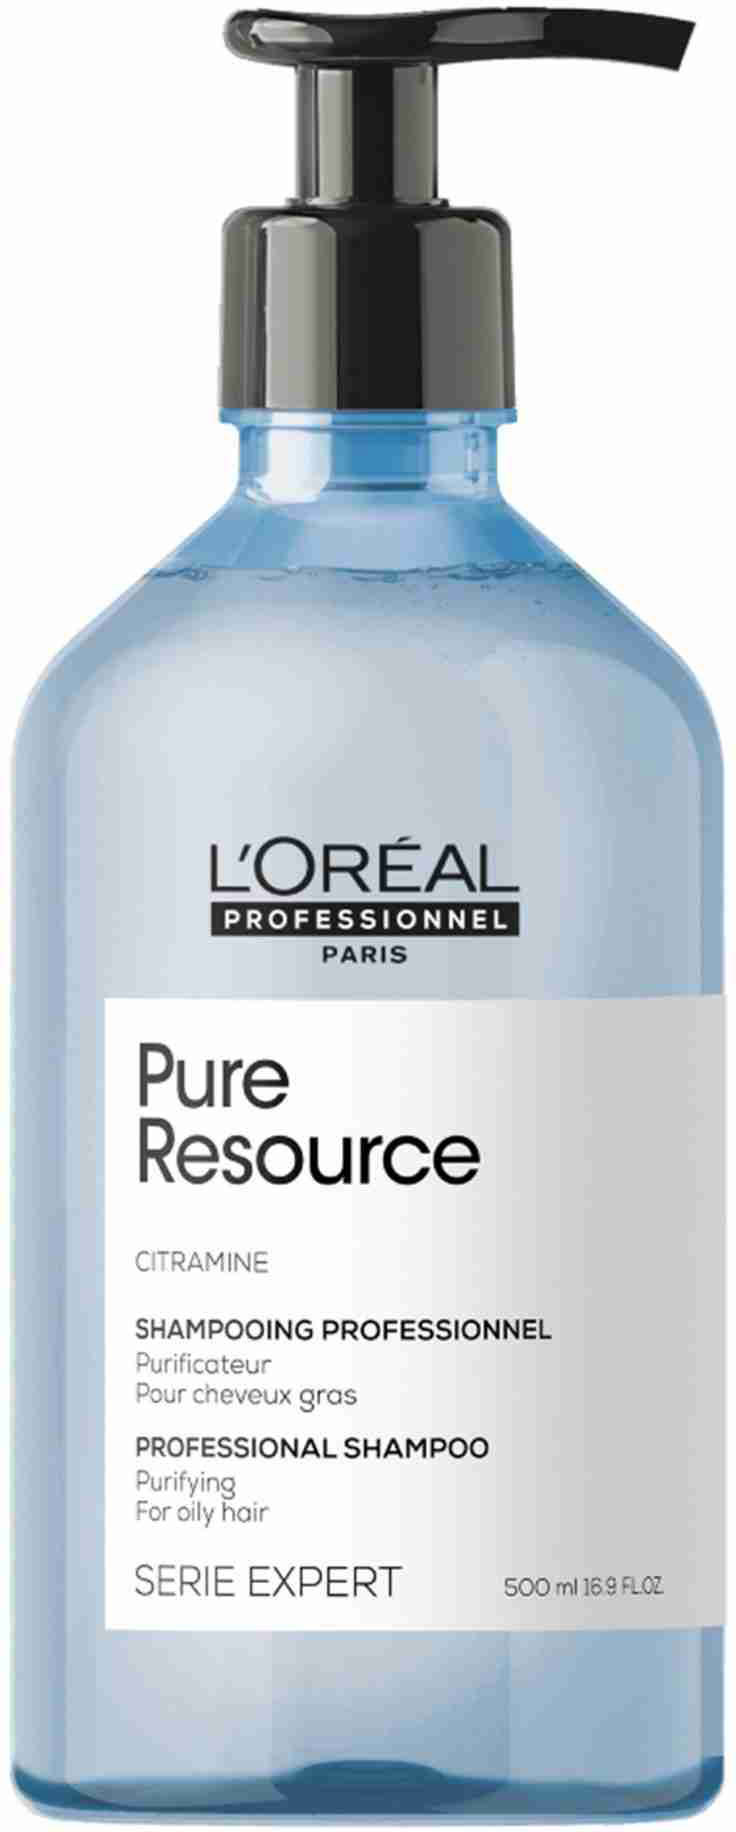 loreal professionnel serie expert pure resource szampon do włosów 500ml